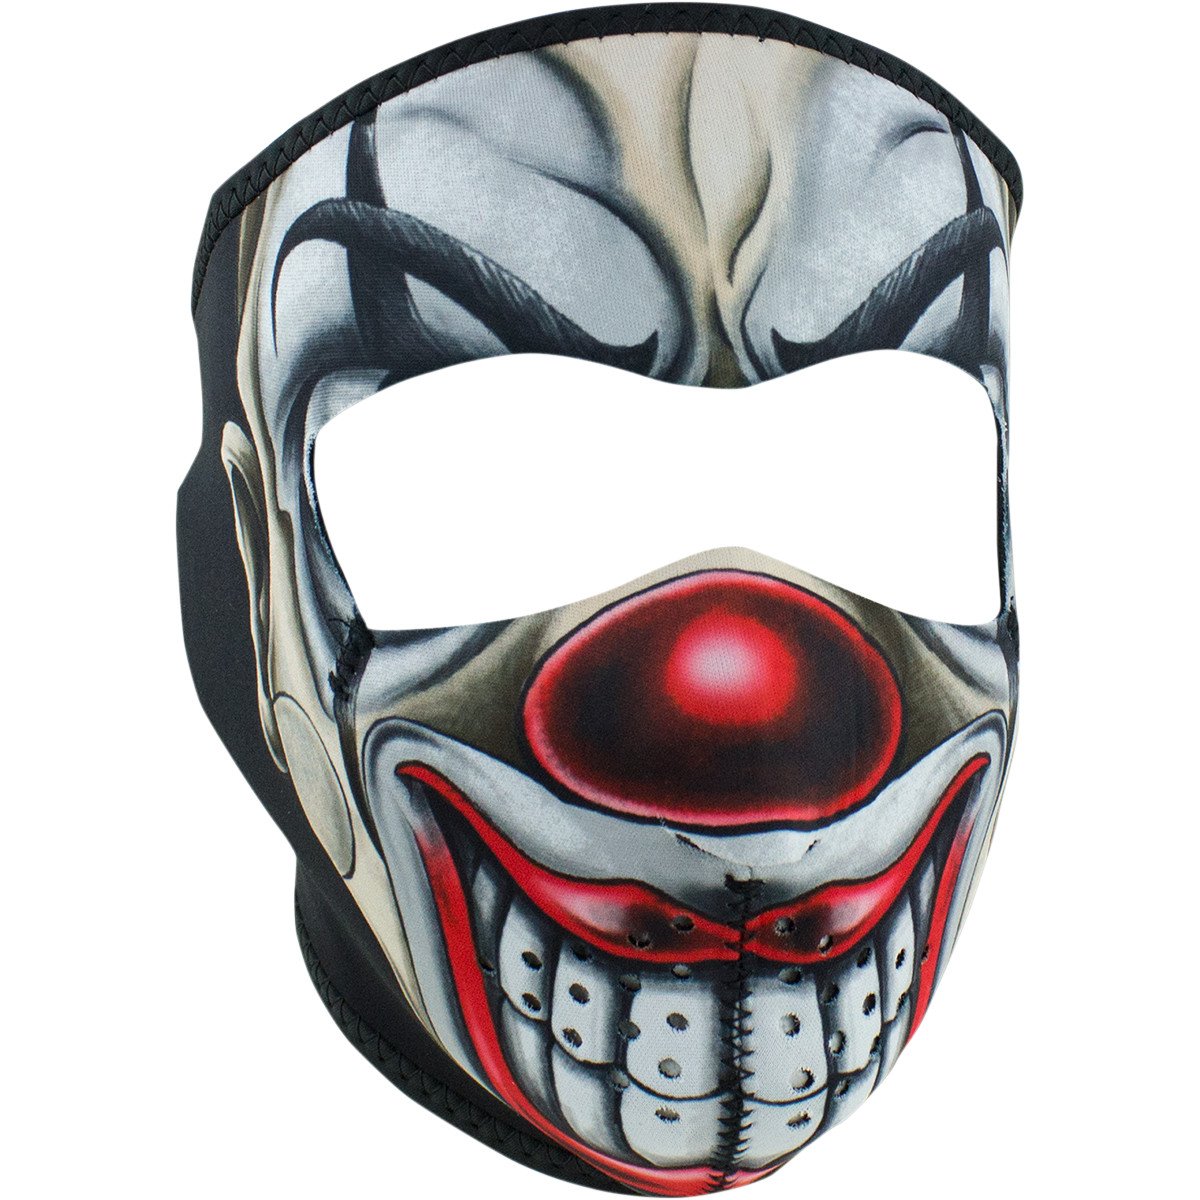 LT Flame Skull Neoprene Full Face Mask Motorcycle Zan Headgear Free Shipping